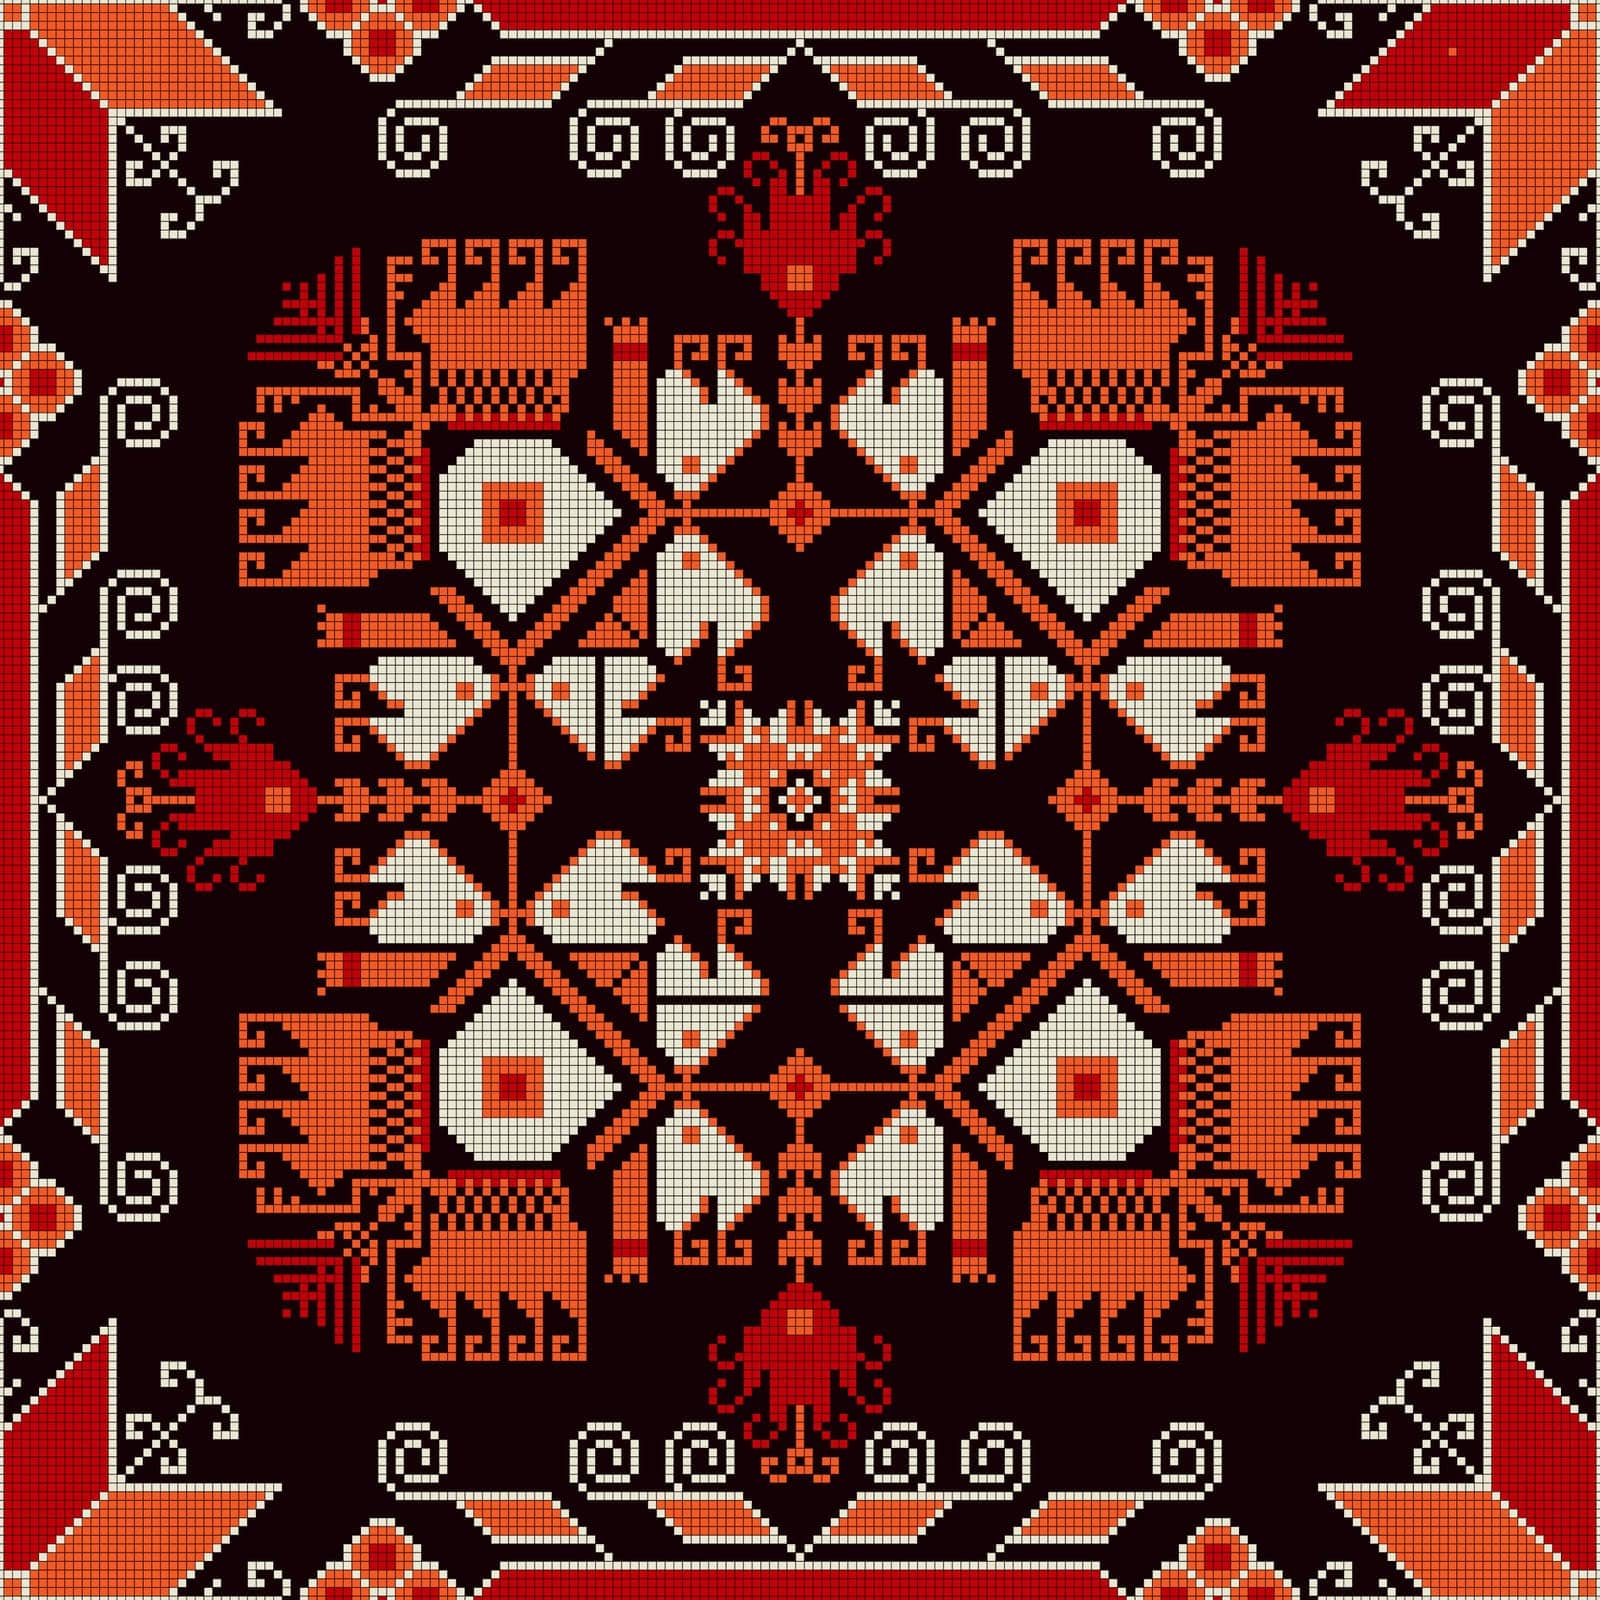 Bulgarian embroidery pattern 98 by Lirch